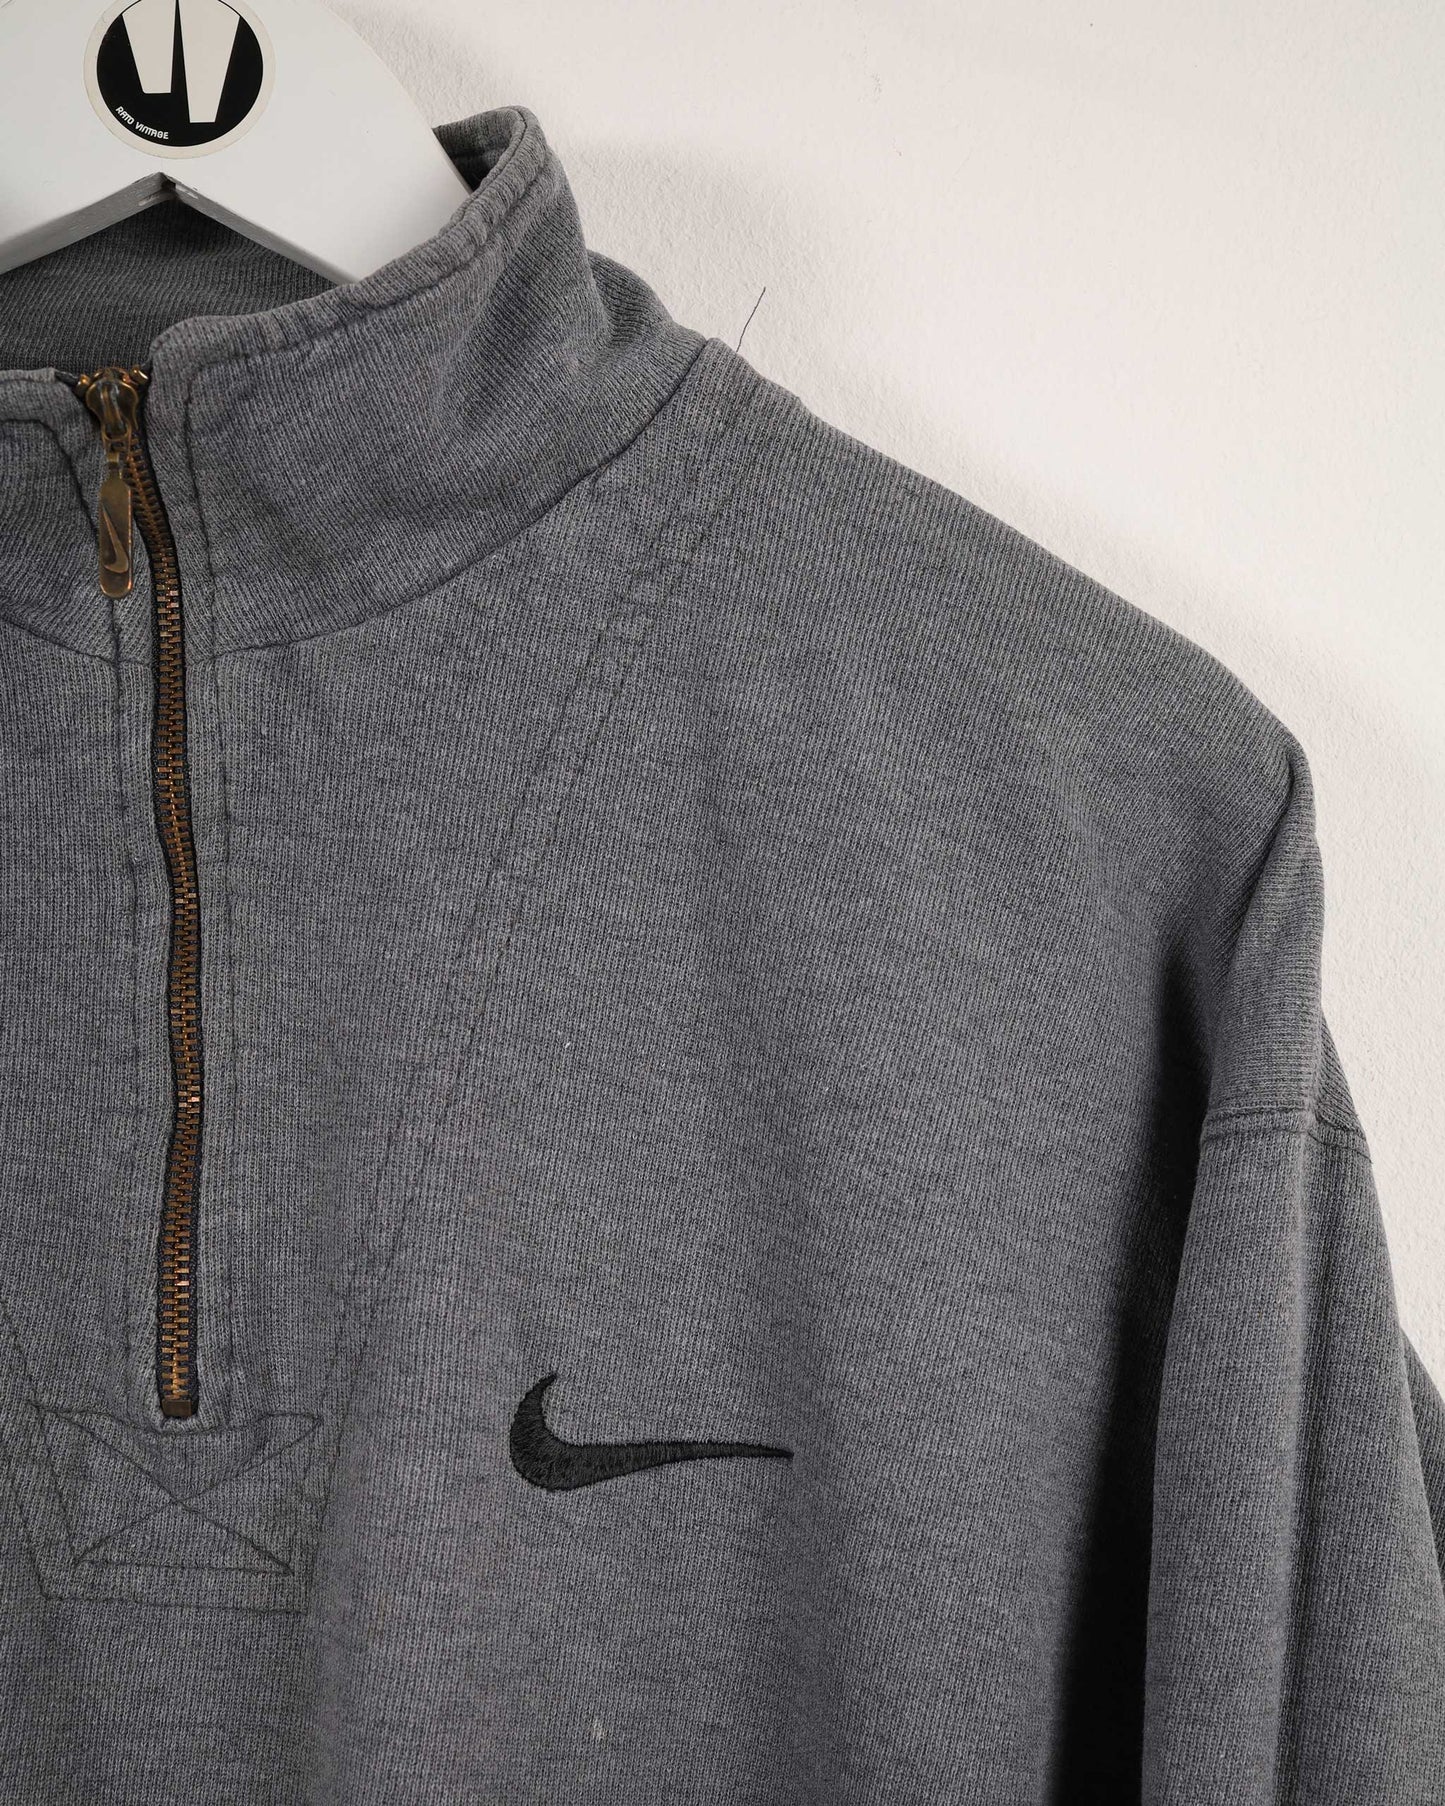 Felpa Nike vintage anni '90 con zip a ¼